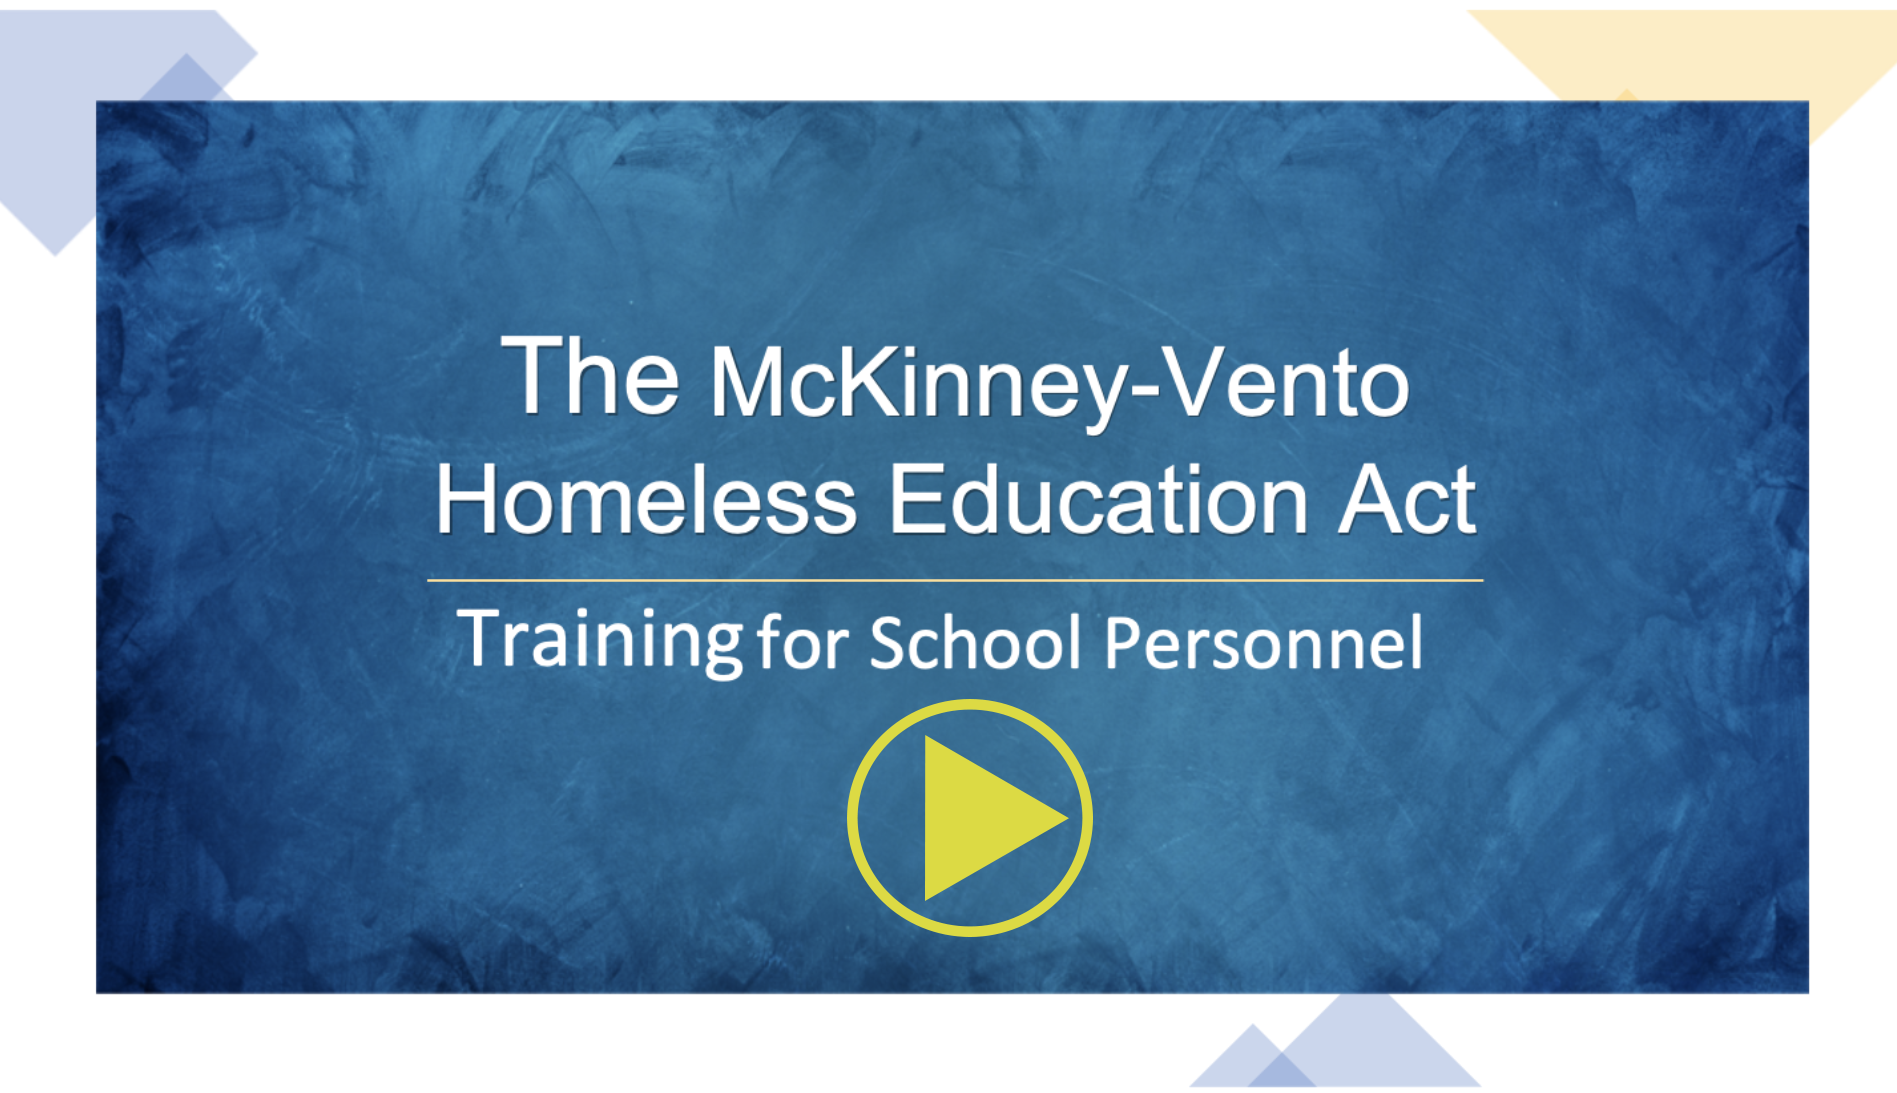 Go to McKinney-Vento Video